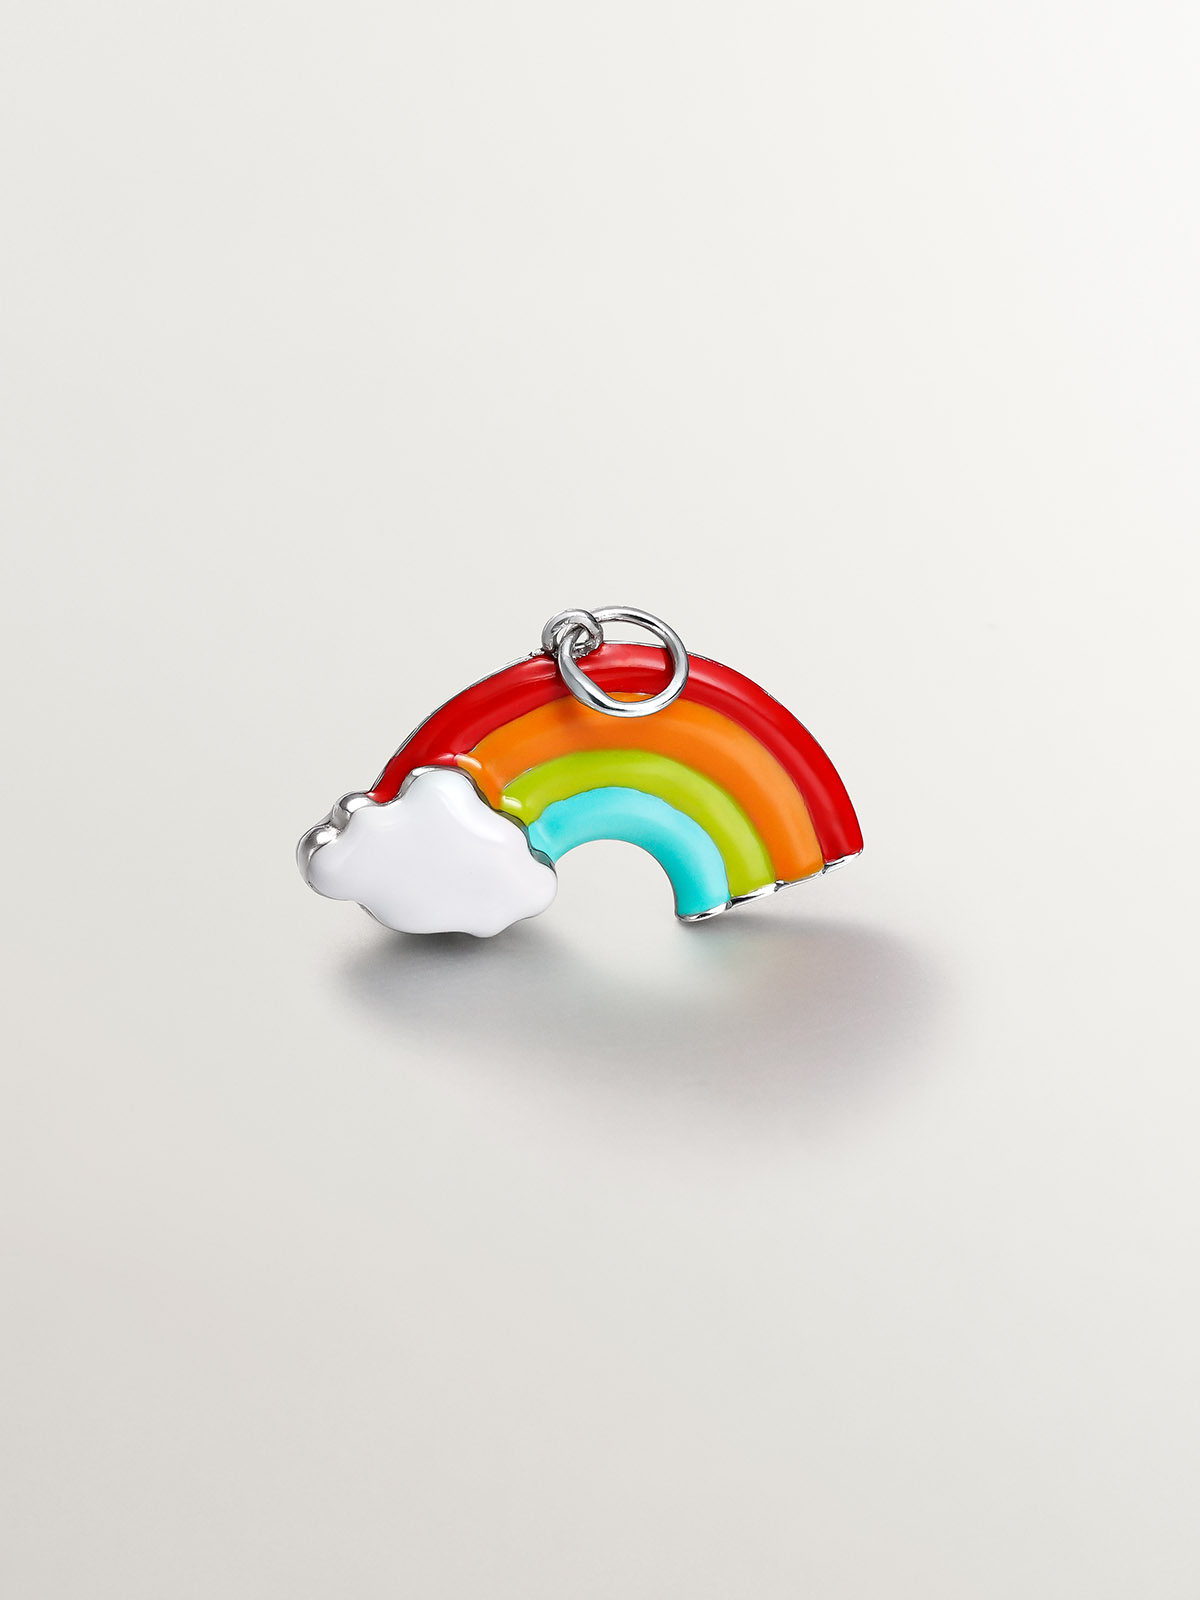 925 silver charm shaped like a rainbow and multicolored enamel